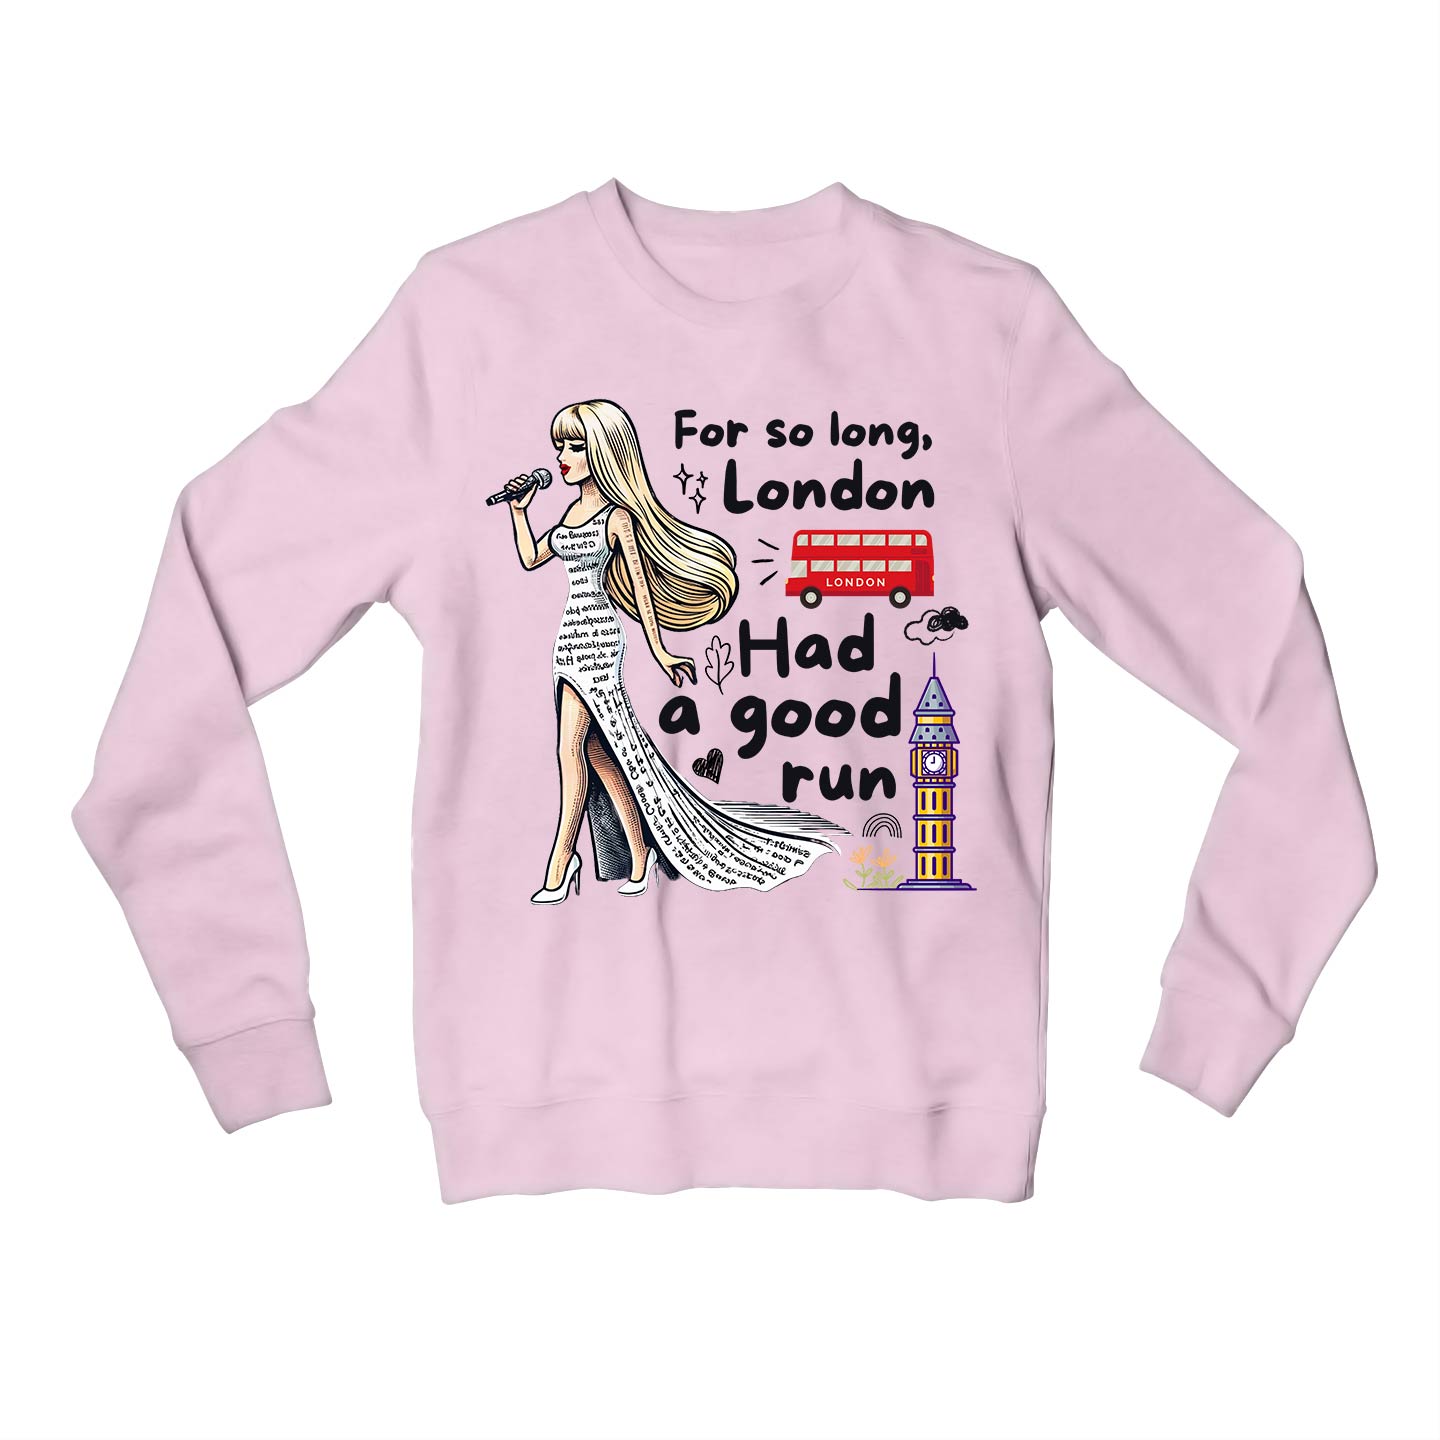 taylor swift so long london sweatshirt upper winterwear music band buy online india the banyan tee tbt men women girls boys unisex baby pink 